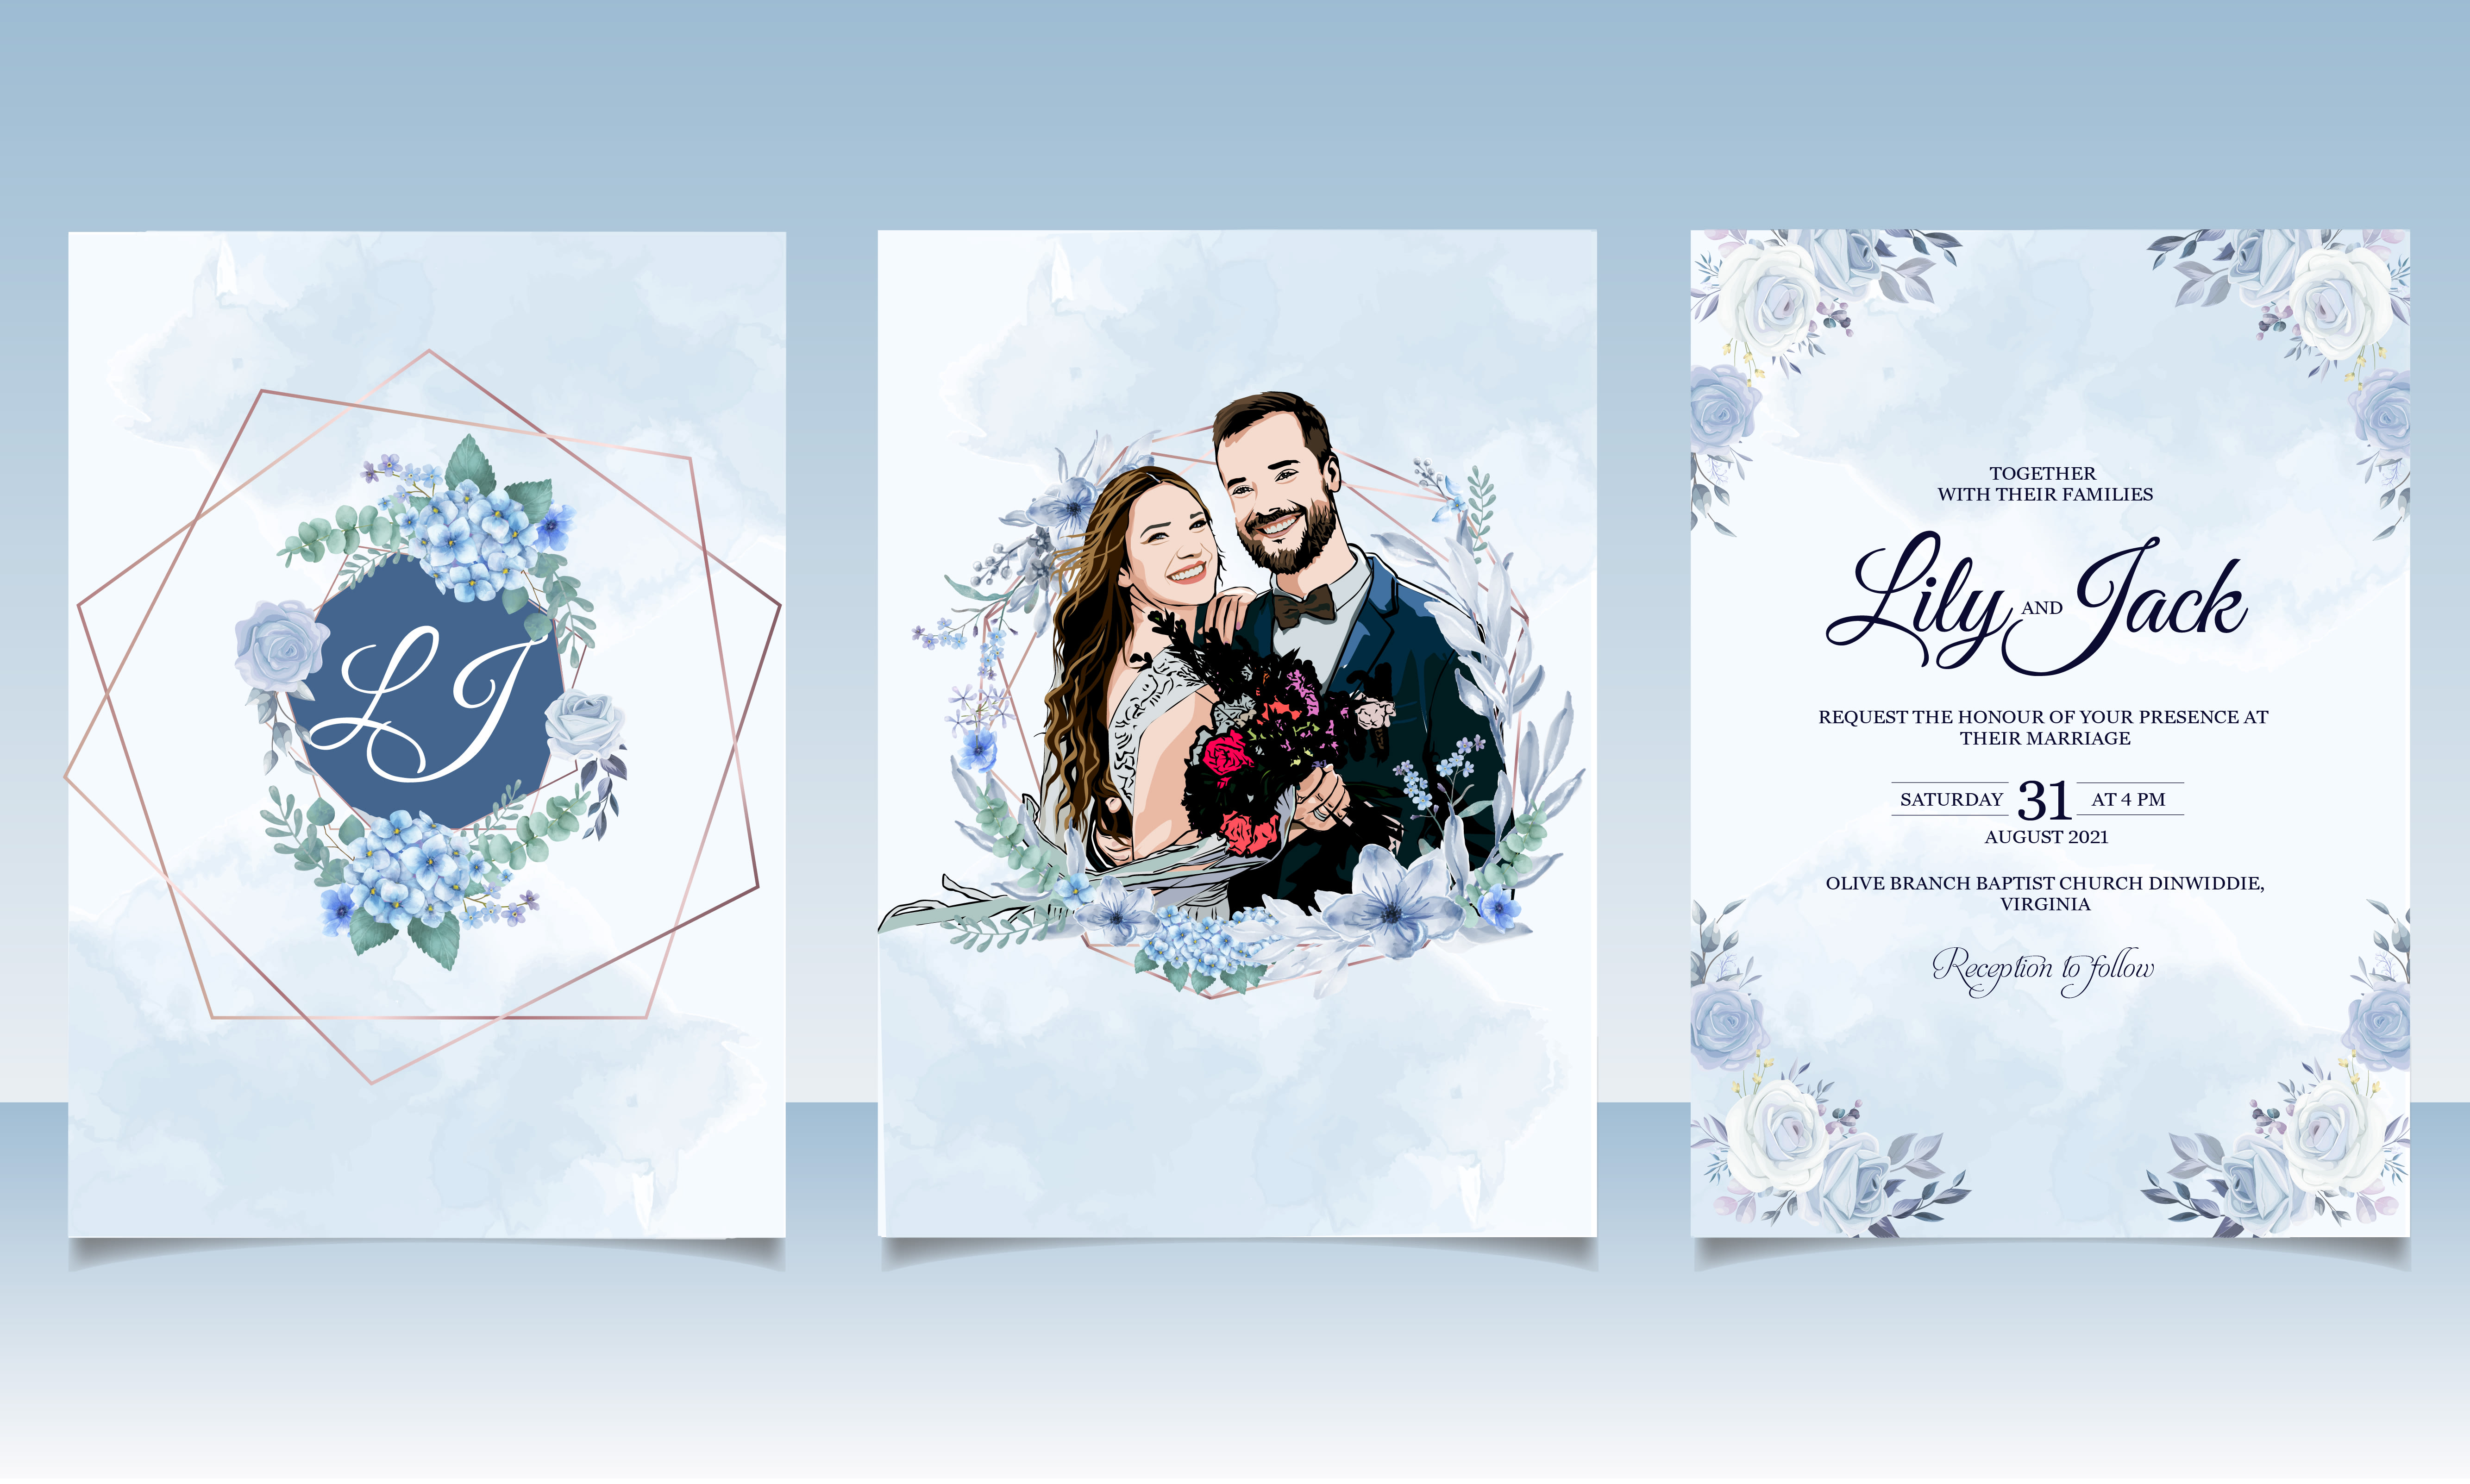 Wedding Invitation Card Design Photos - Home Design Ideas